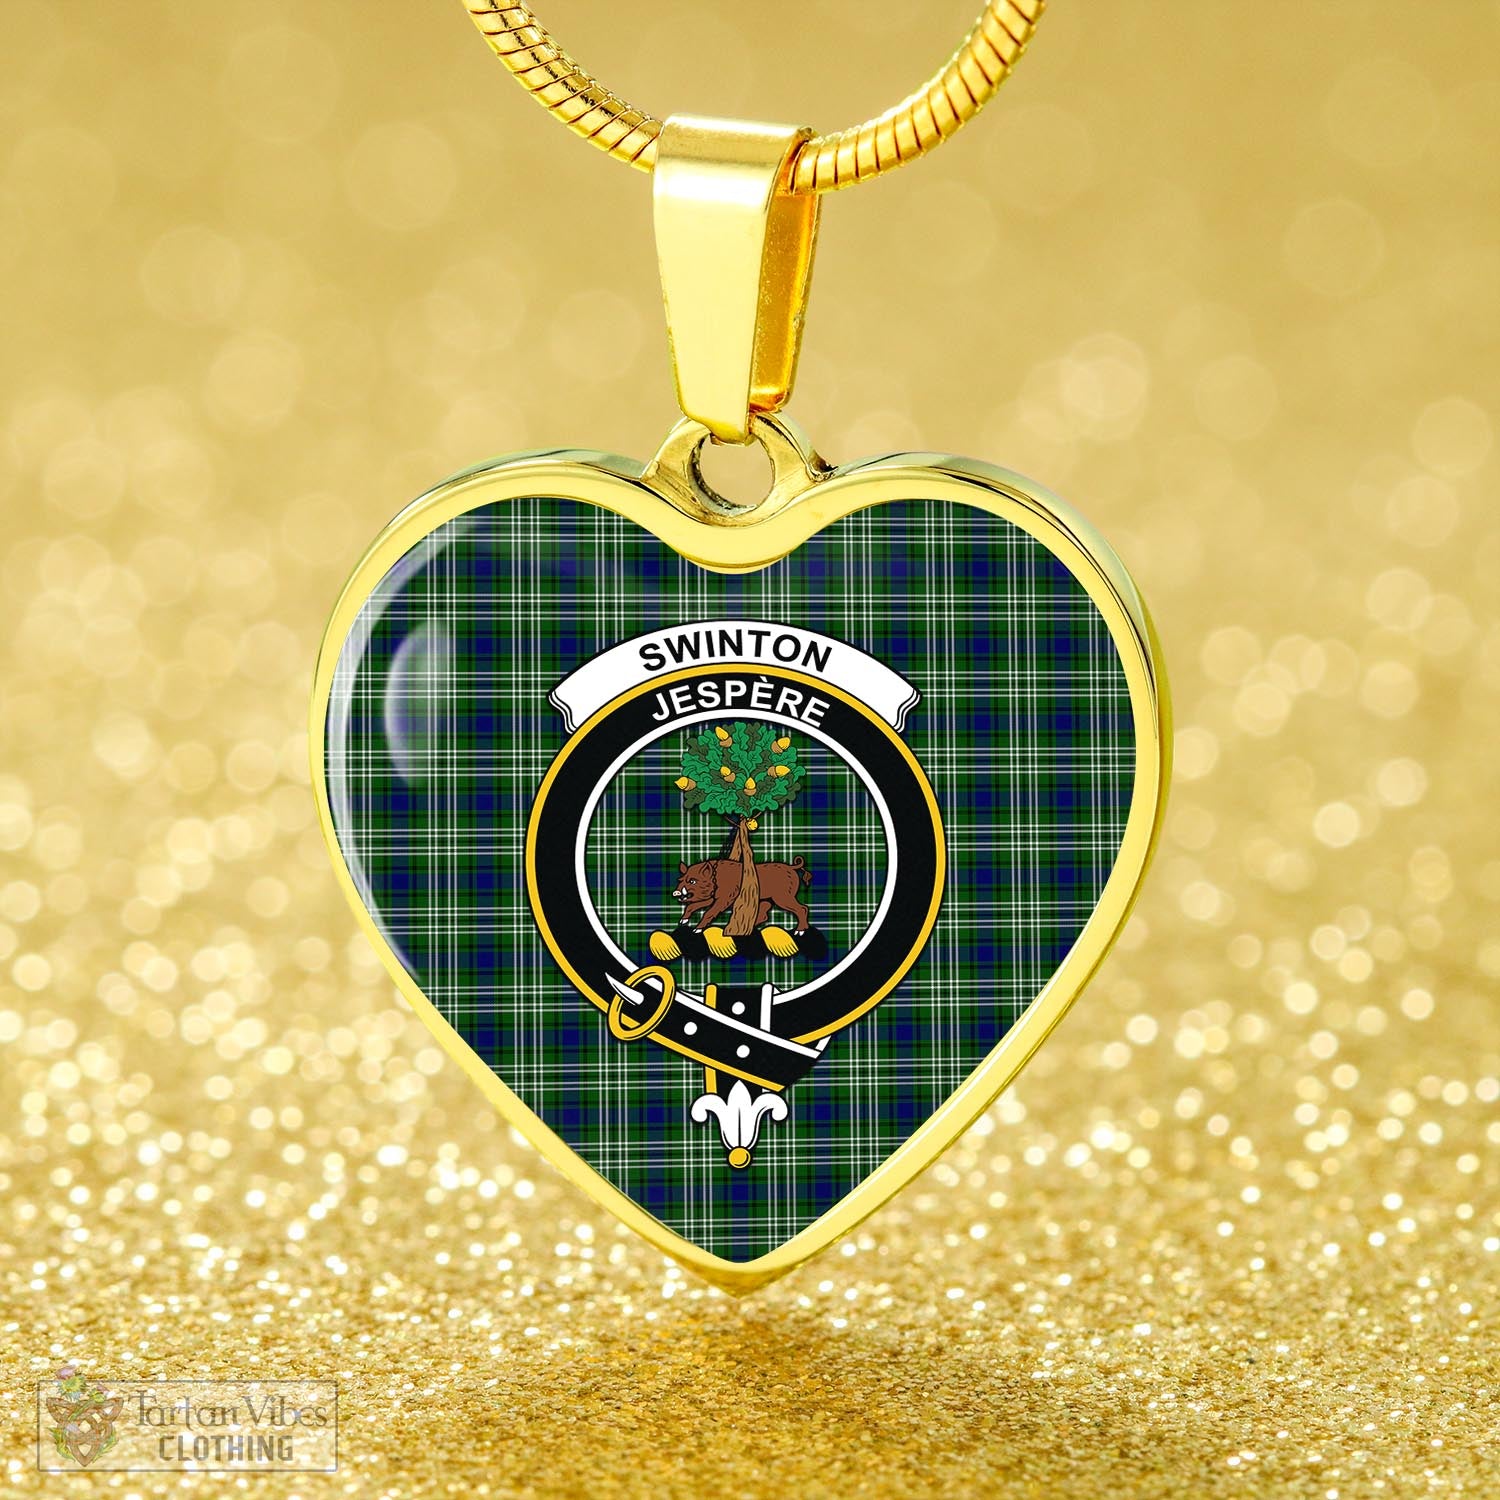 Tartan Vibes Clothing Swinton Tartan Heart Necklace with Family Crest